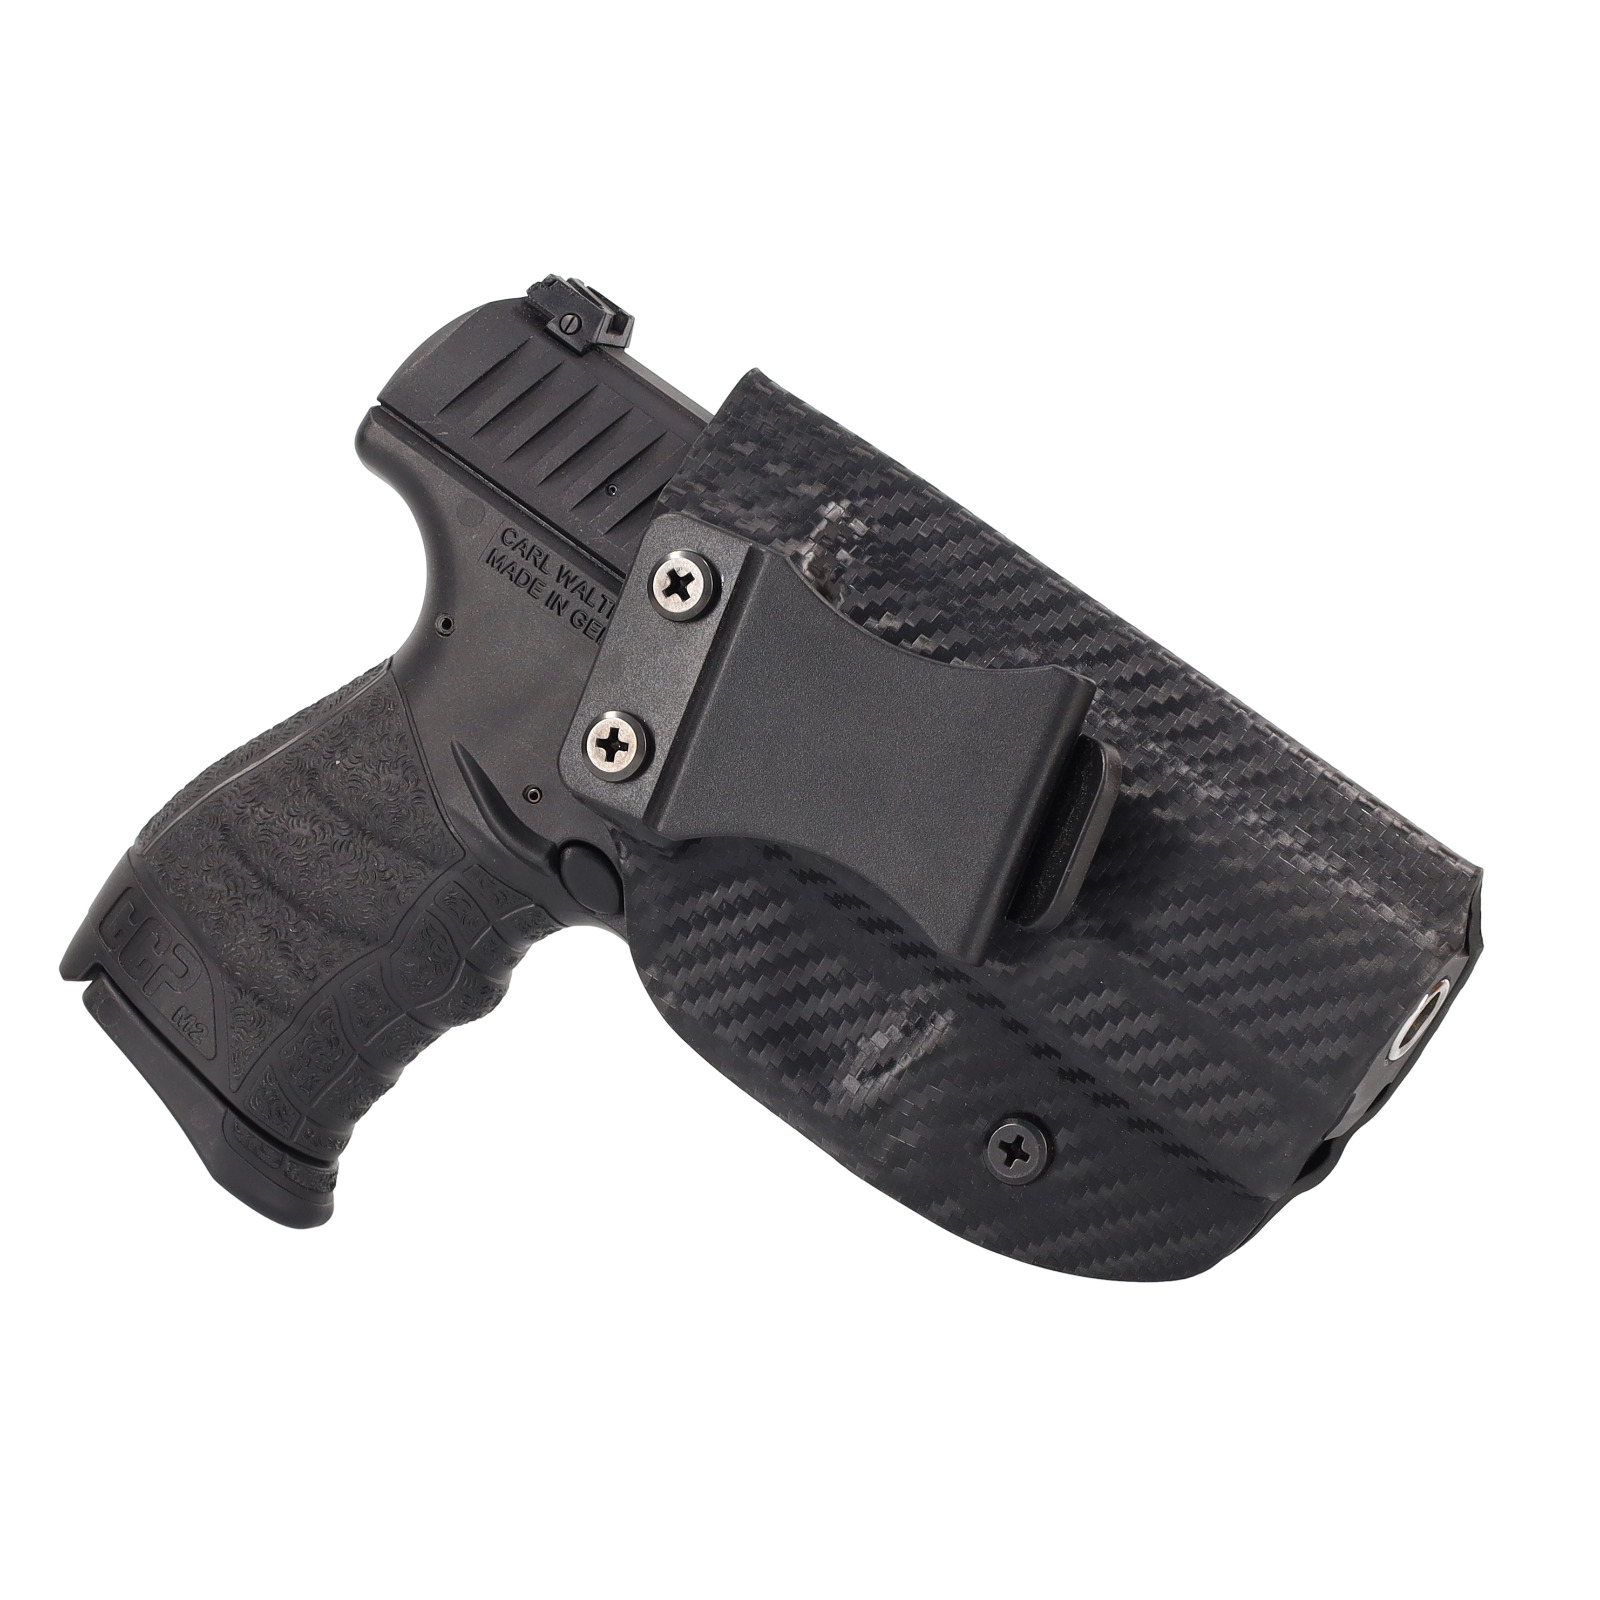 Concealment IWB Gun Holster for Beretta Handguns - Black Carbon Fiber